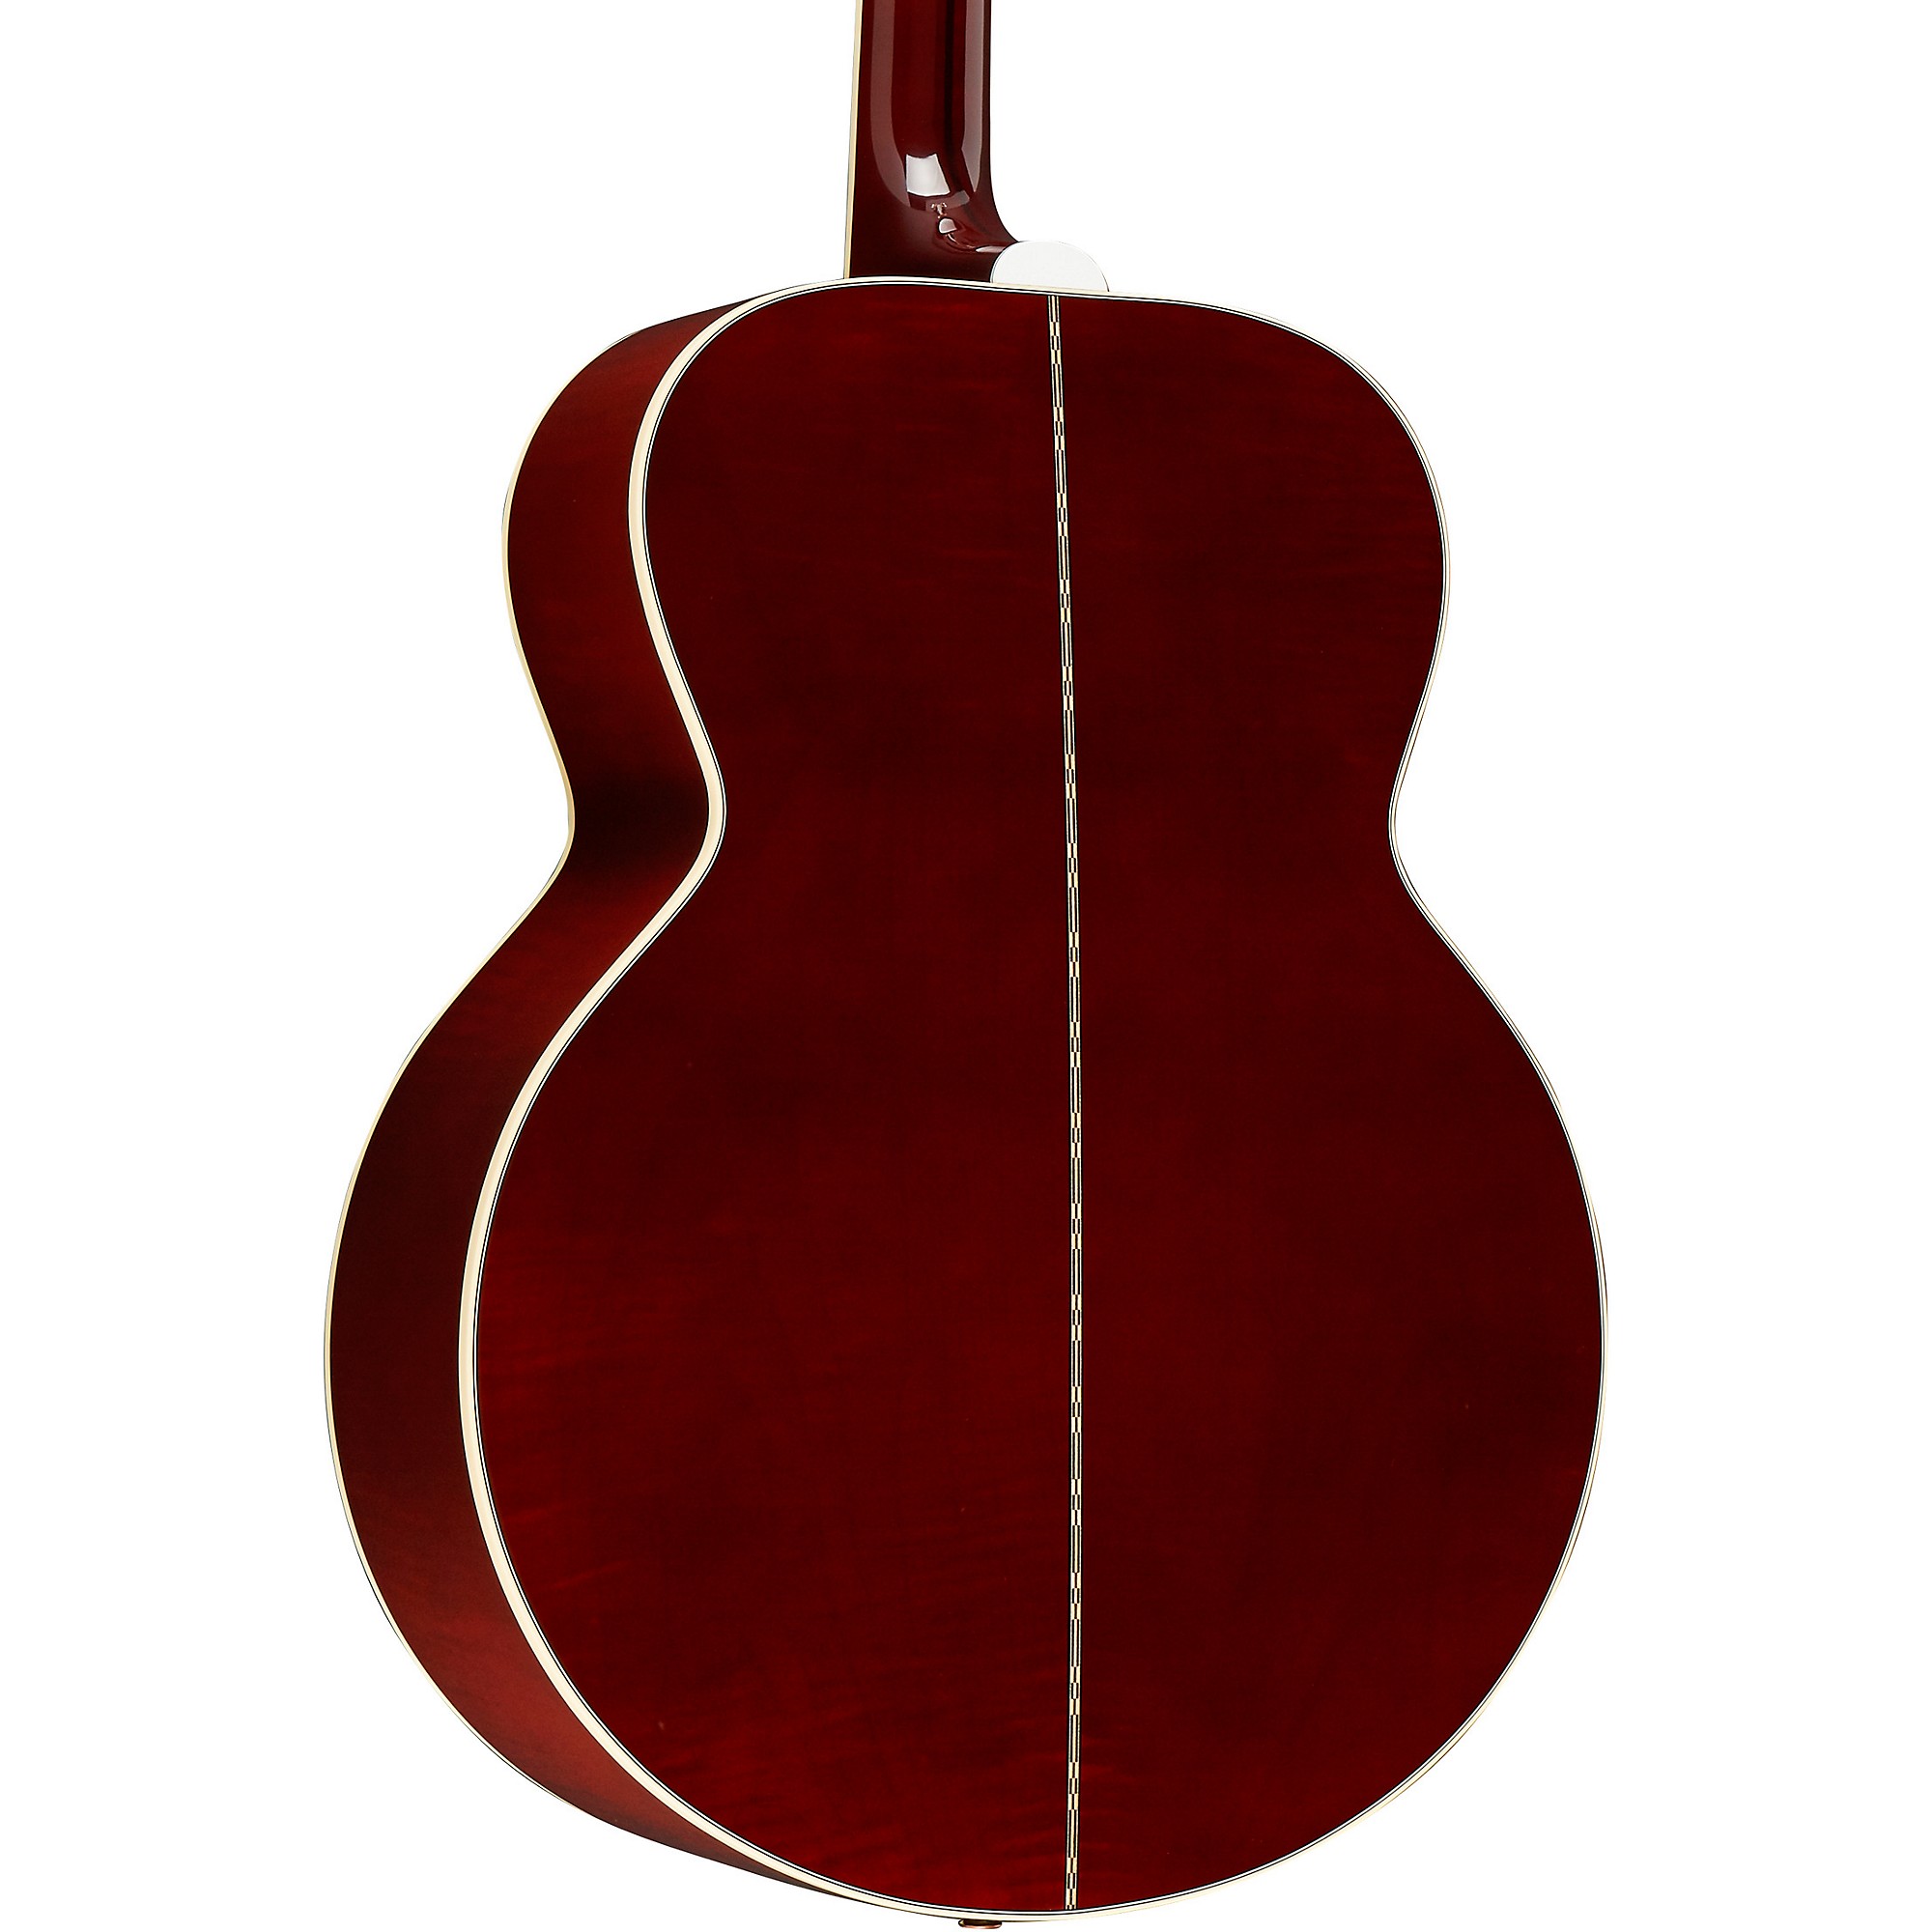 Gibson SJ-200 Standard Акустически-Электрическая Гитара Autumn Burst акустическая гитара gibson sj 200 standard autumn burst